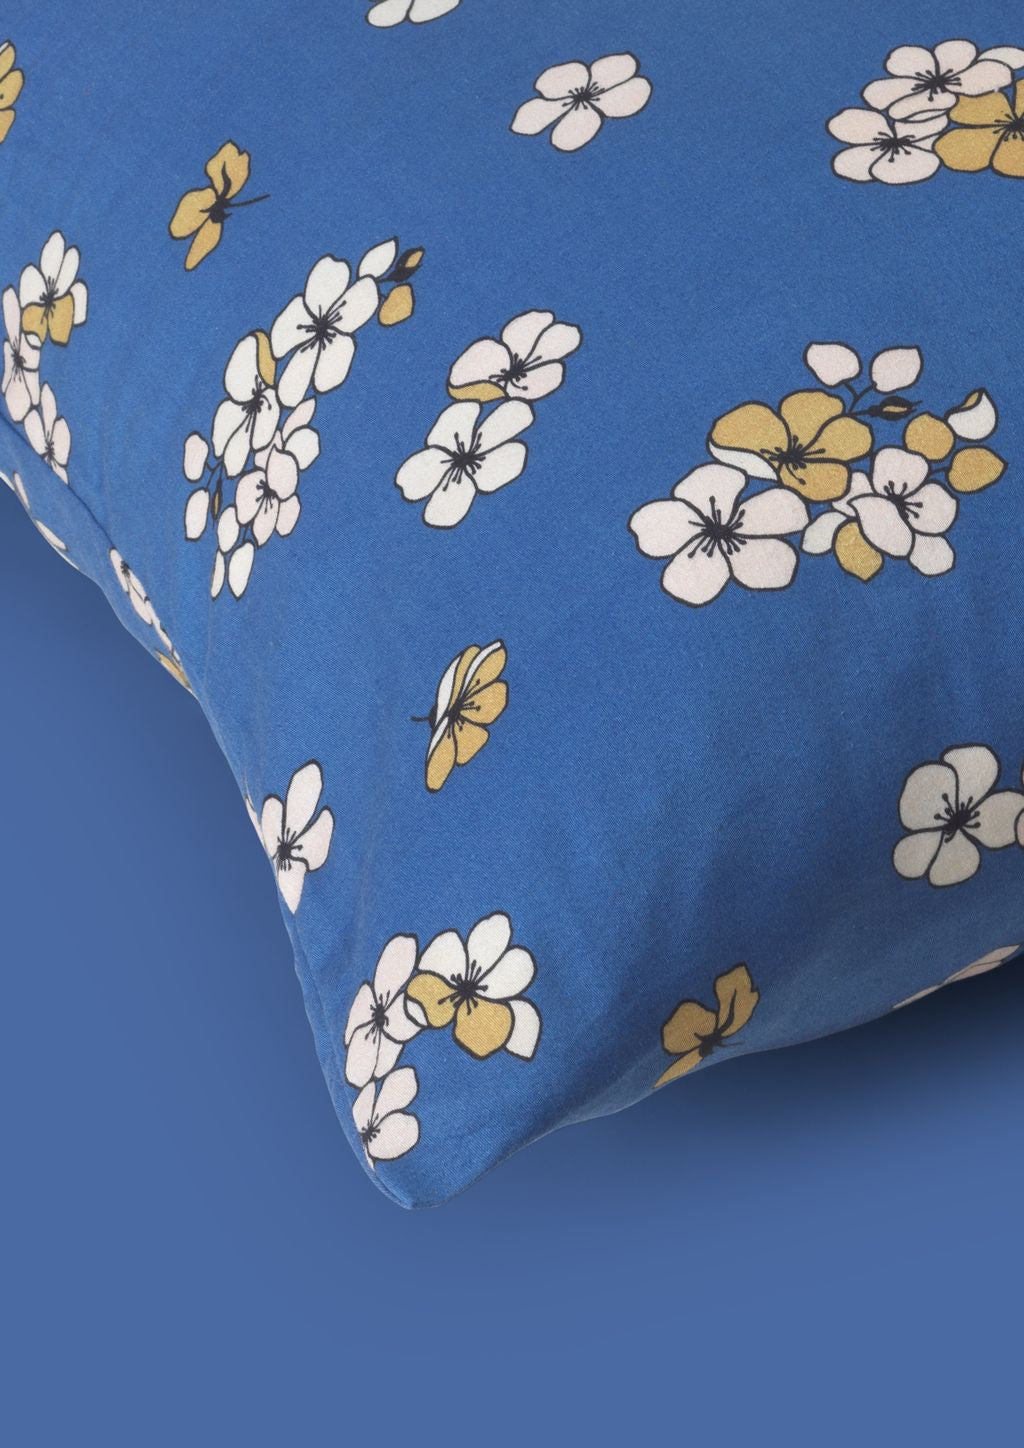 Juna Grand愉快的枕套63 x60厘米，蓝色